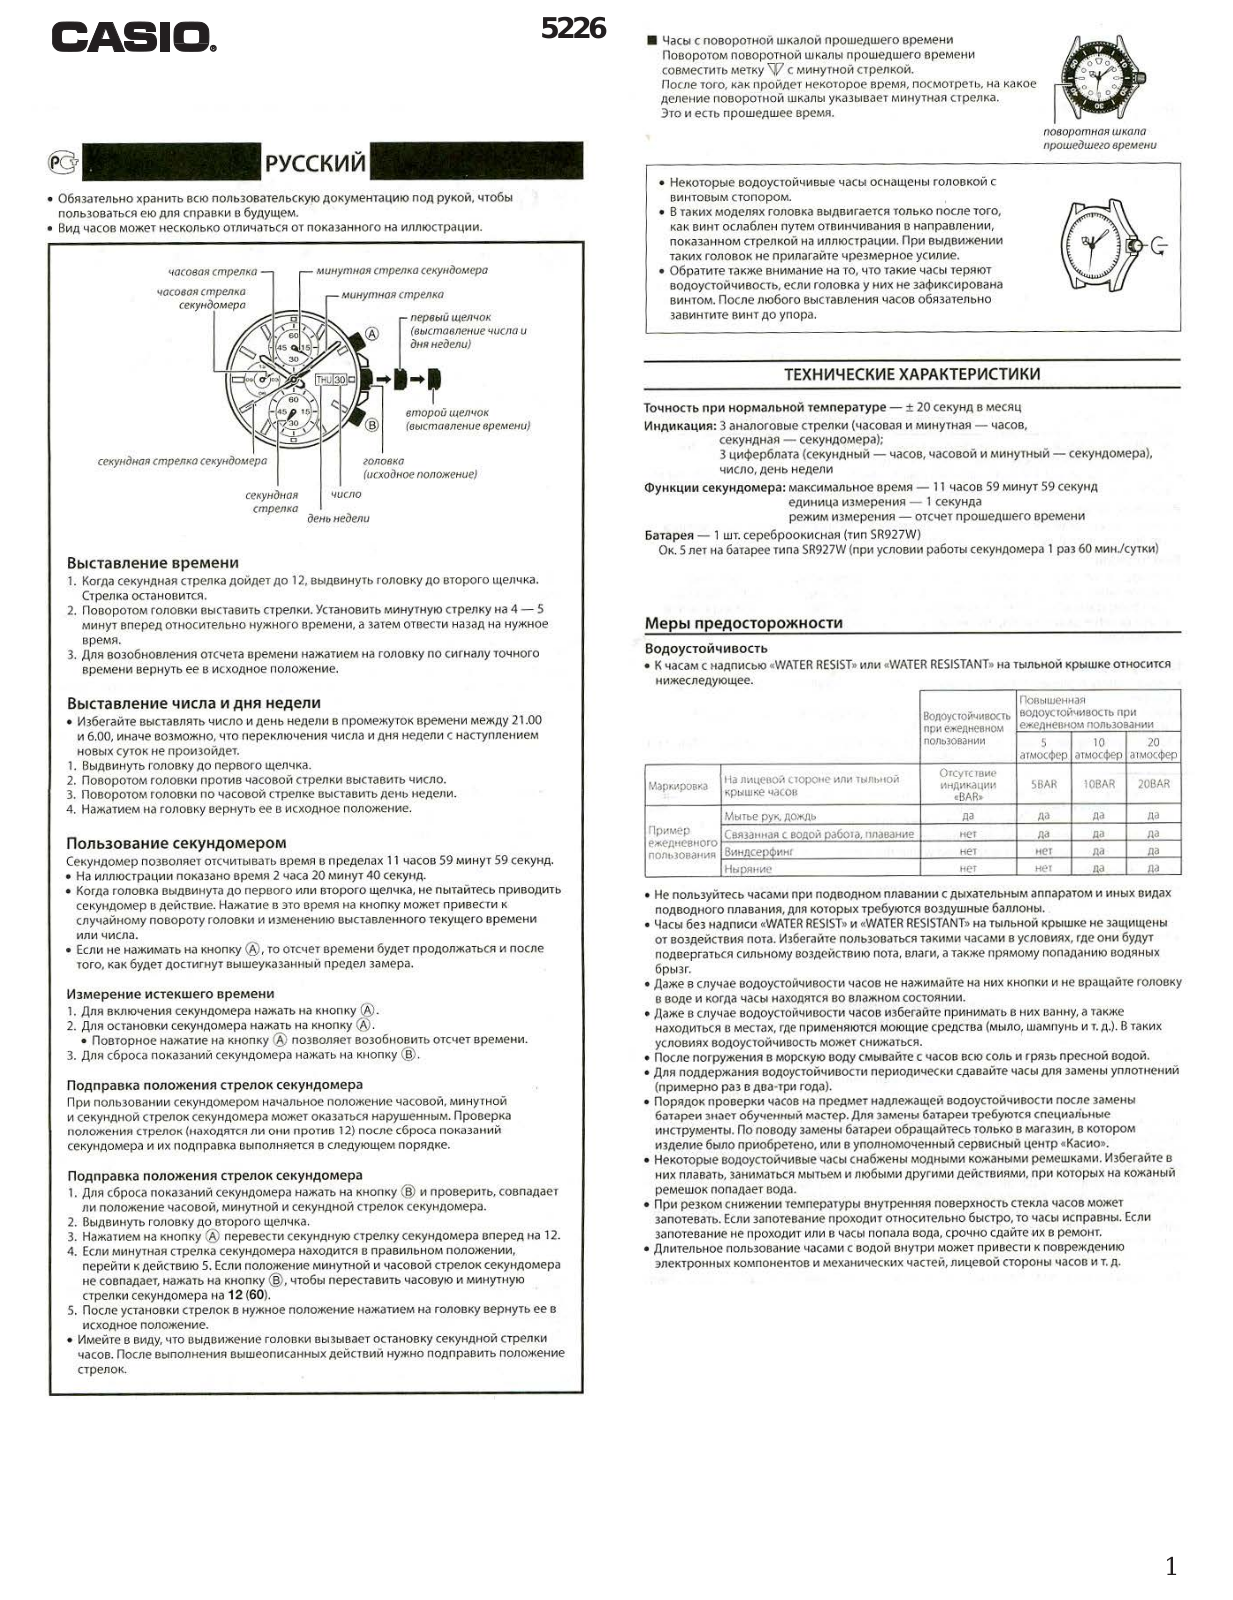 Casio EFR-503D-1A1 User Manual